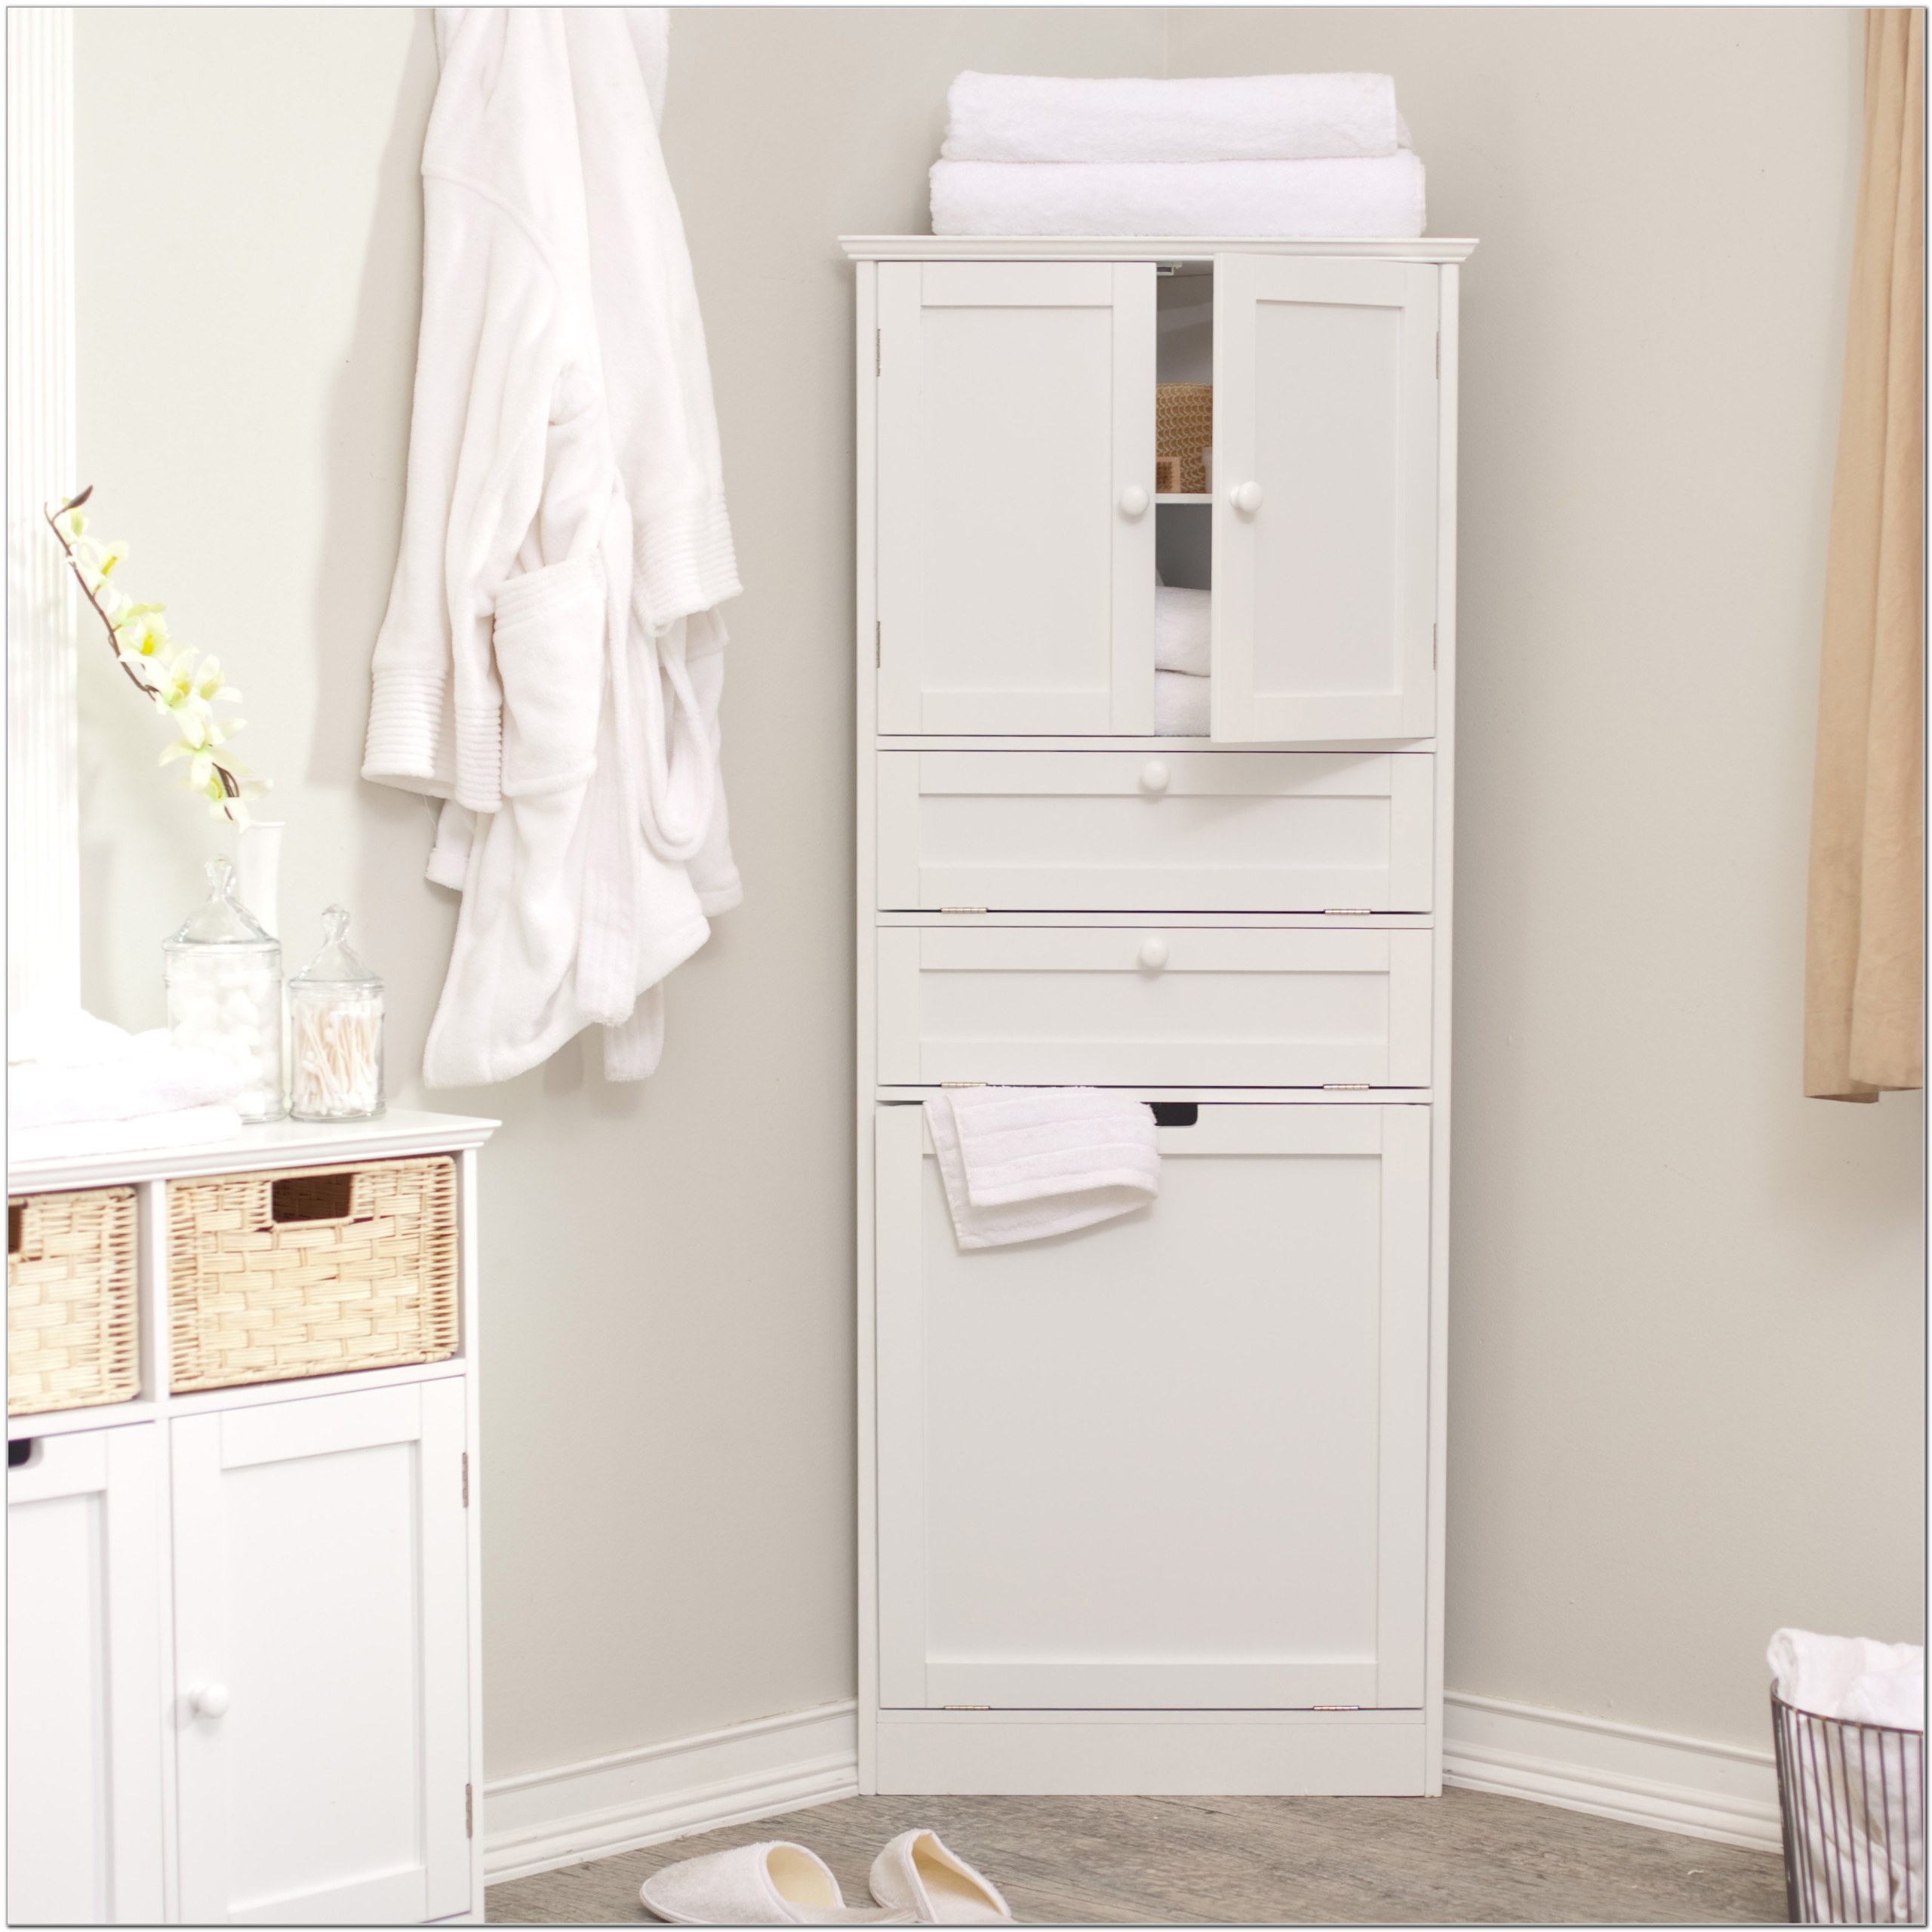 Bathroom cool white wooden corner bathroom storage cabinets with